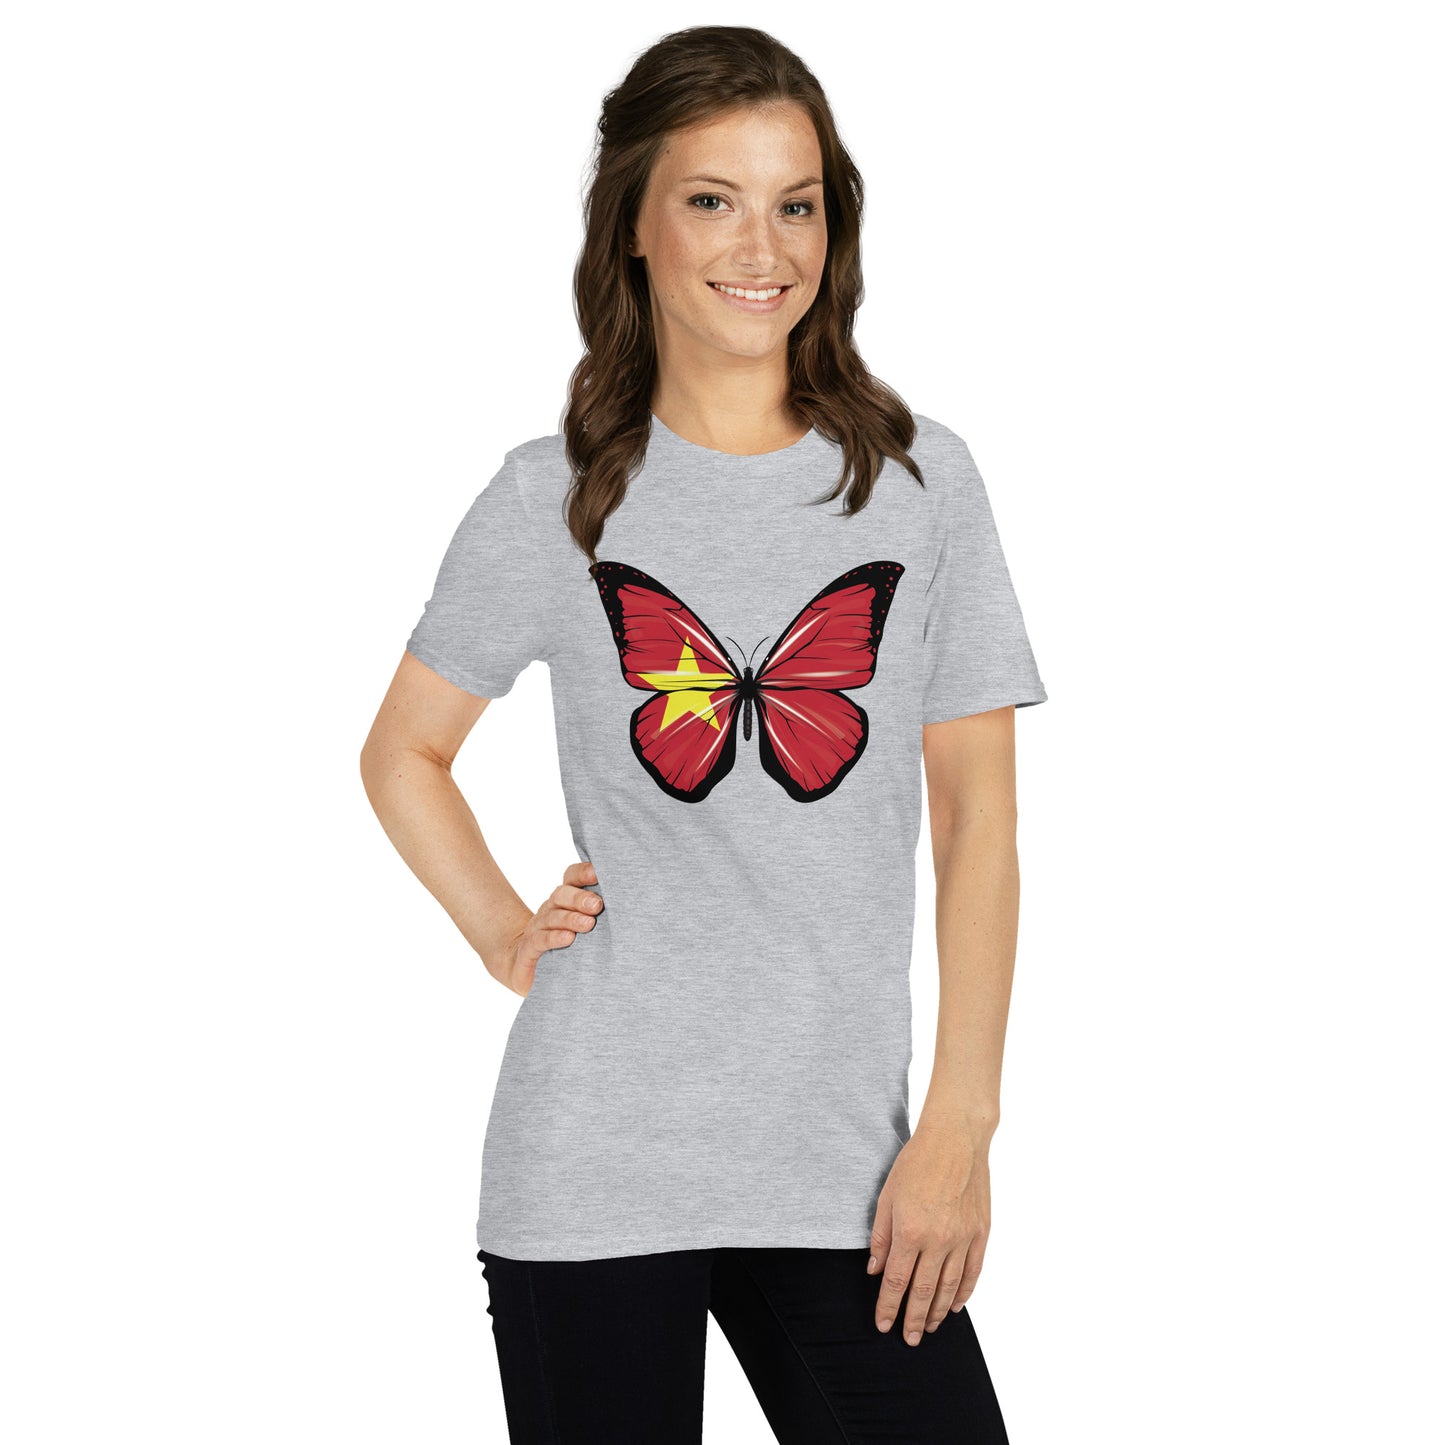 Vietnamese t-shirt with butterfly design